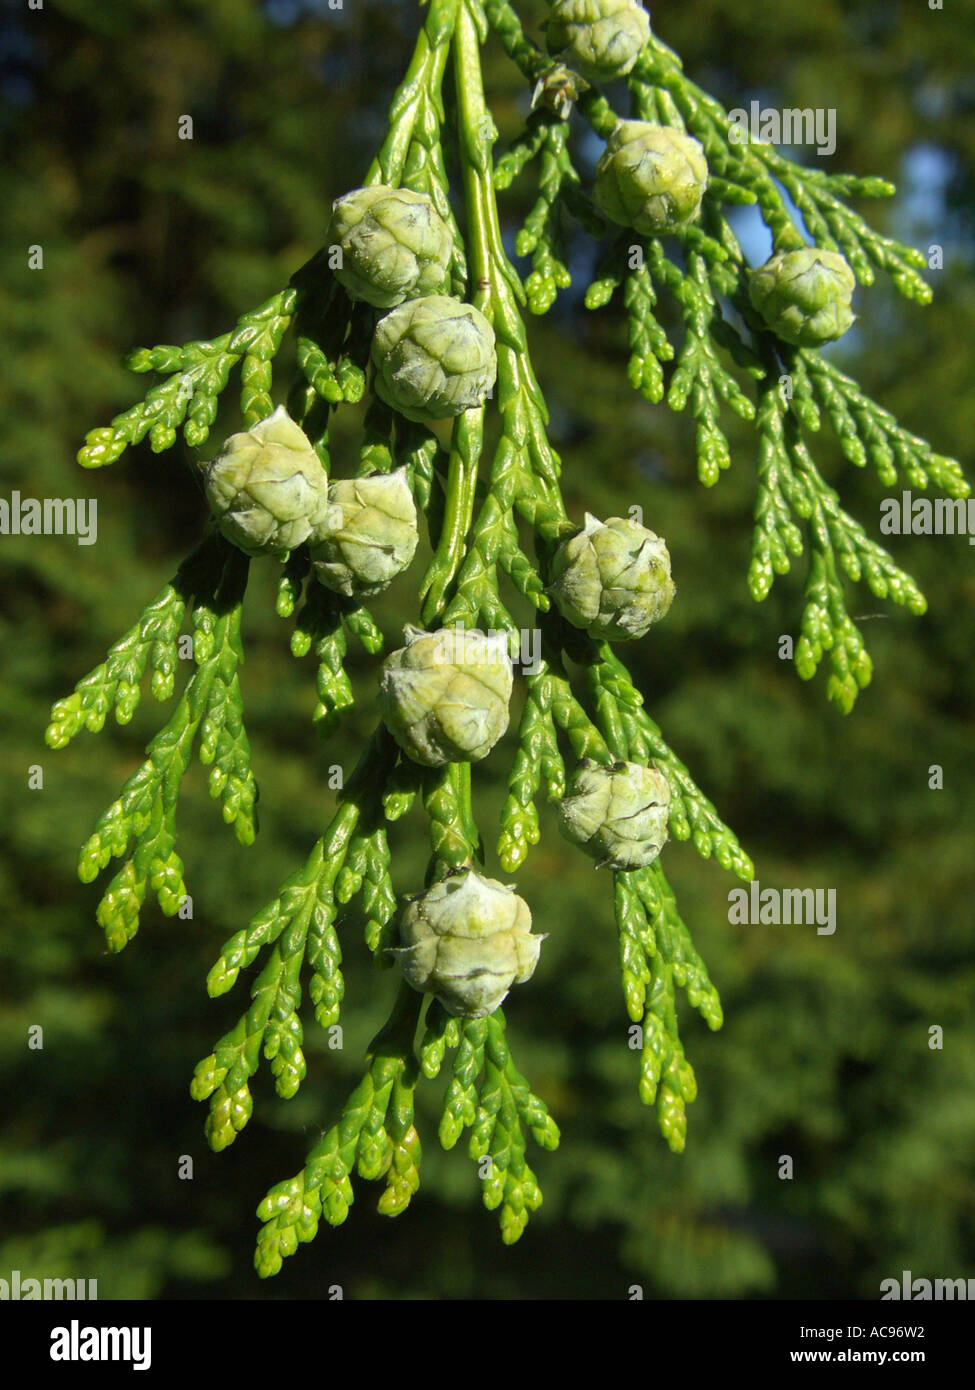 Lawson cypress, Port Orford cedar (Chamaecyparis lawsoniana), twig with young cones Stock Photo